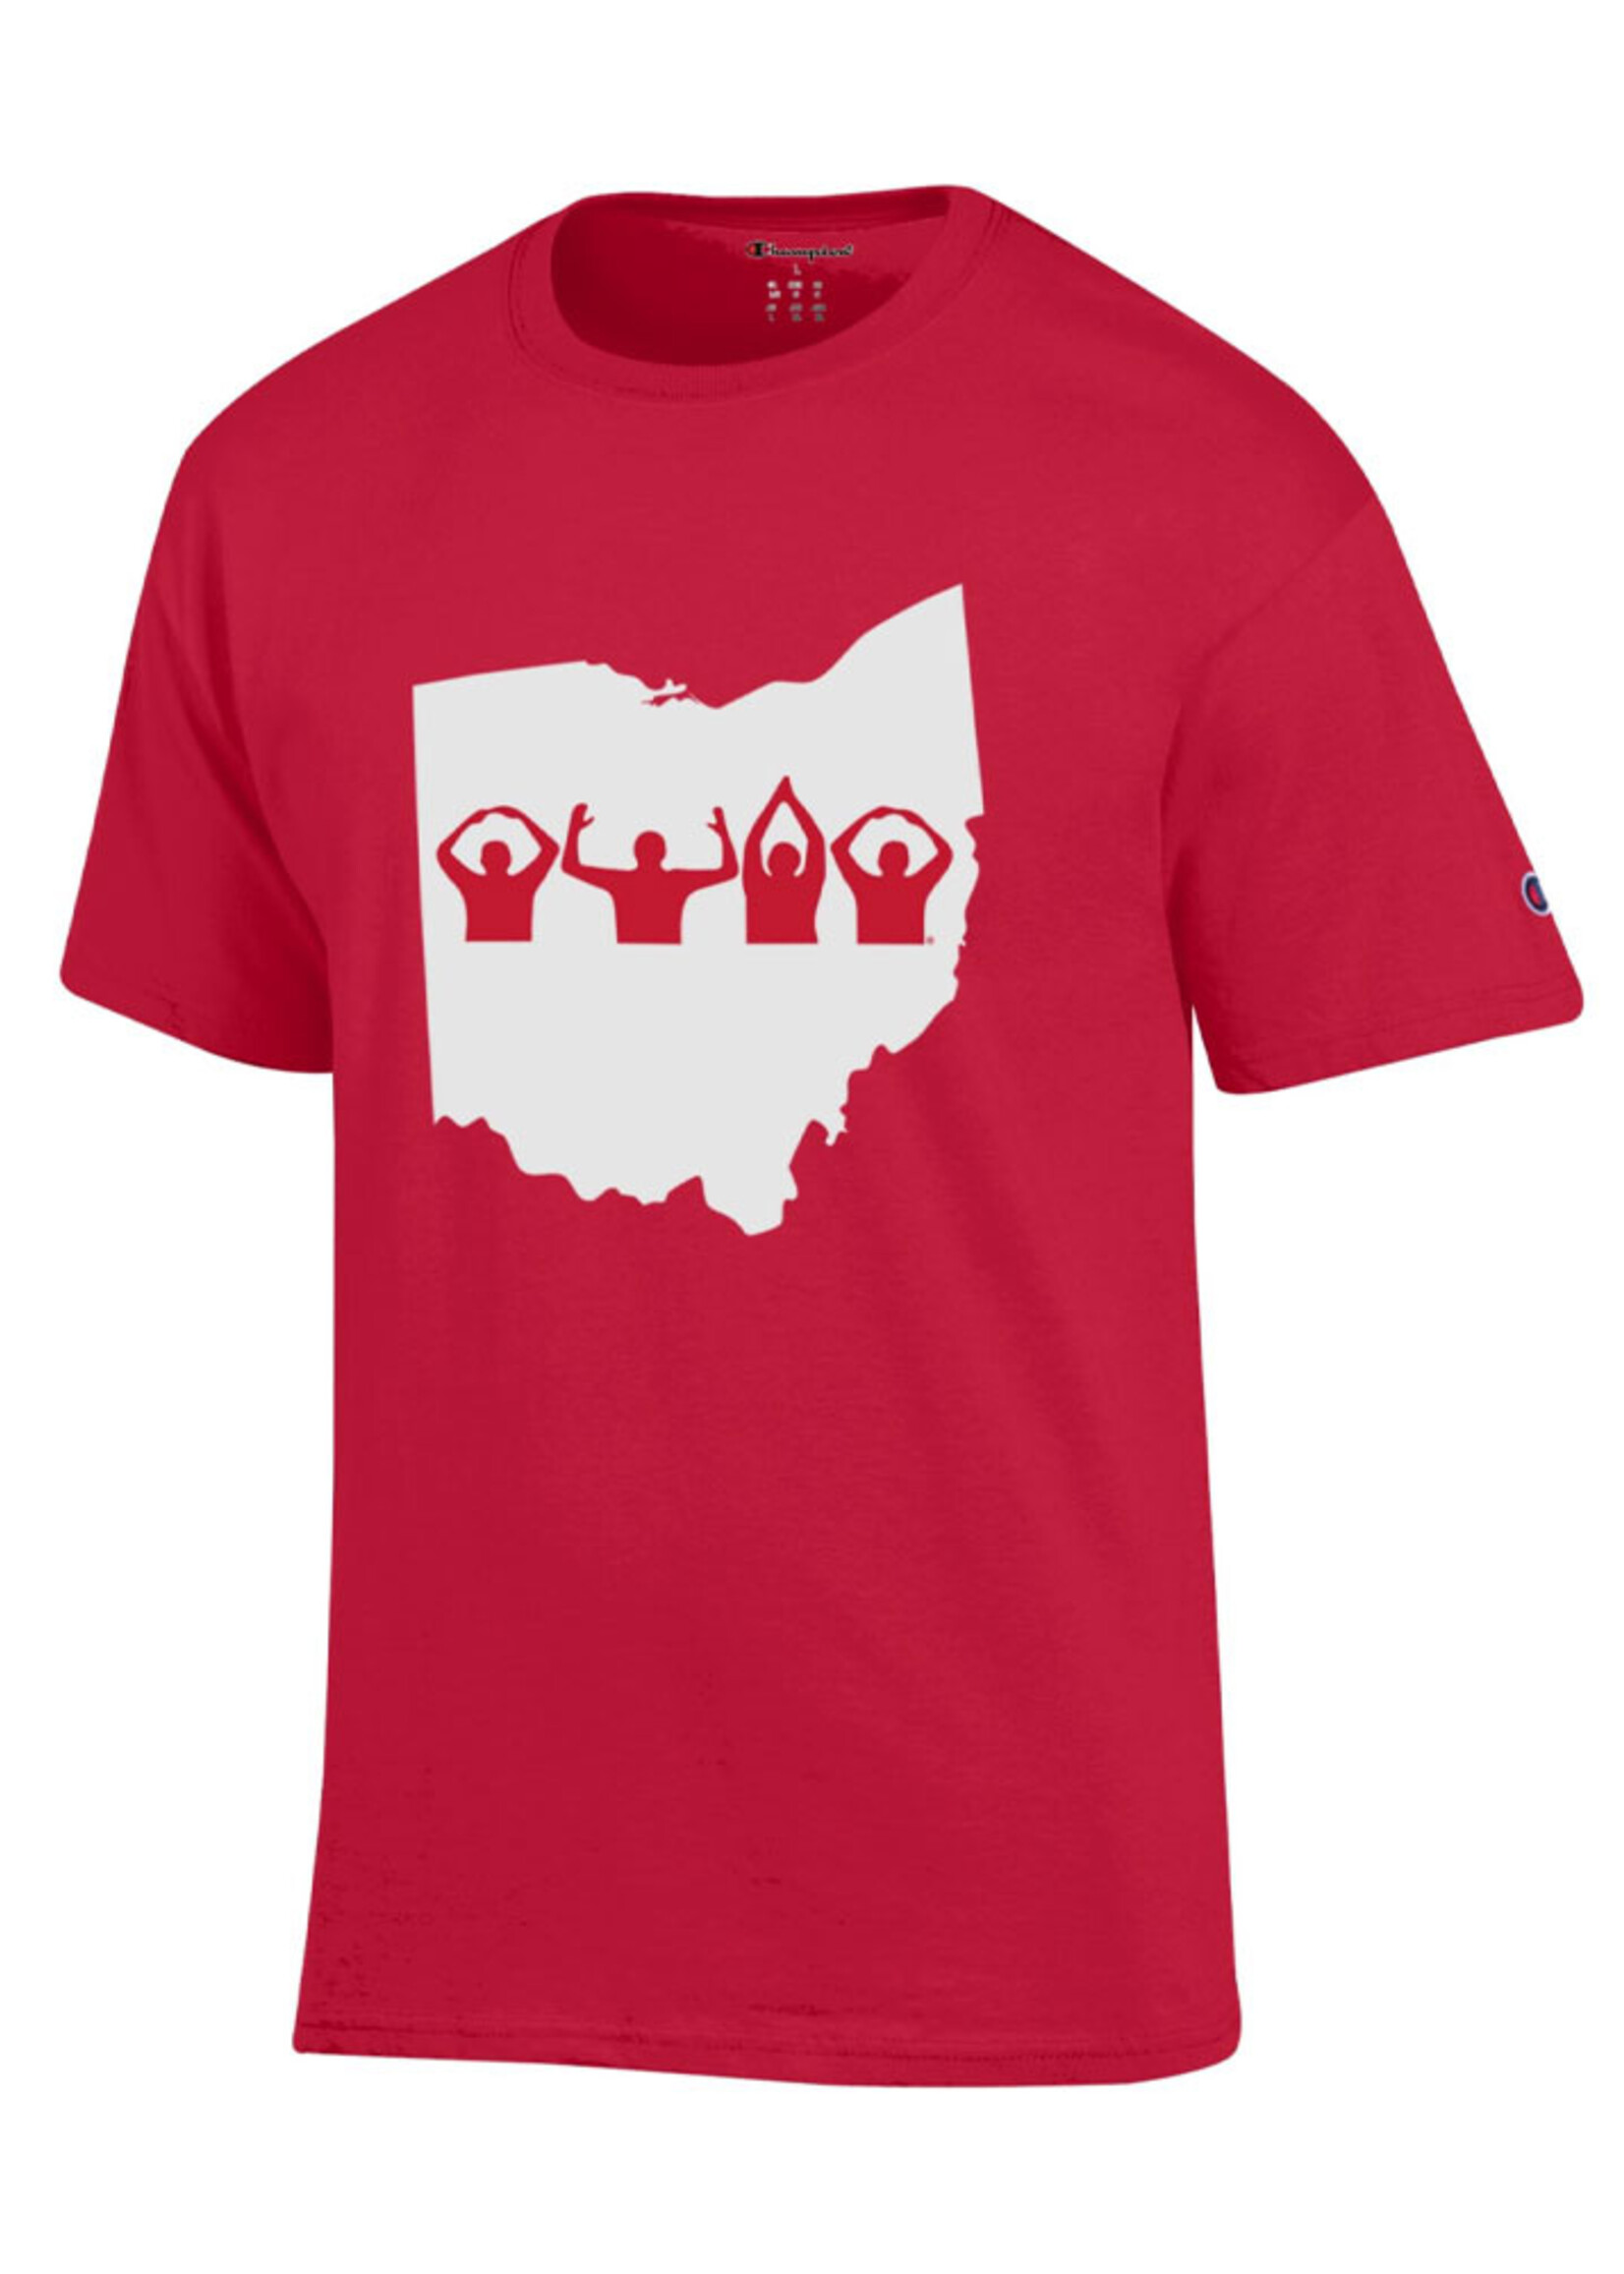 Champion Ohio State Buckeyes O-H-I-O State Map Shirt